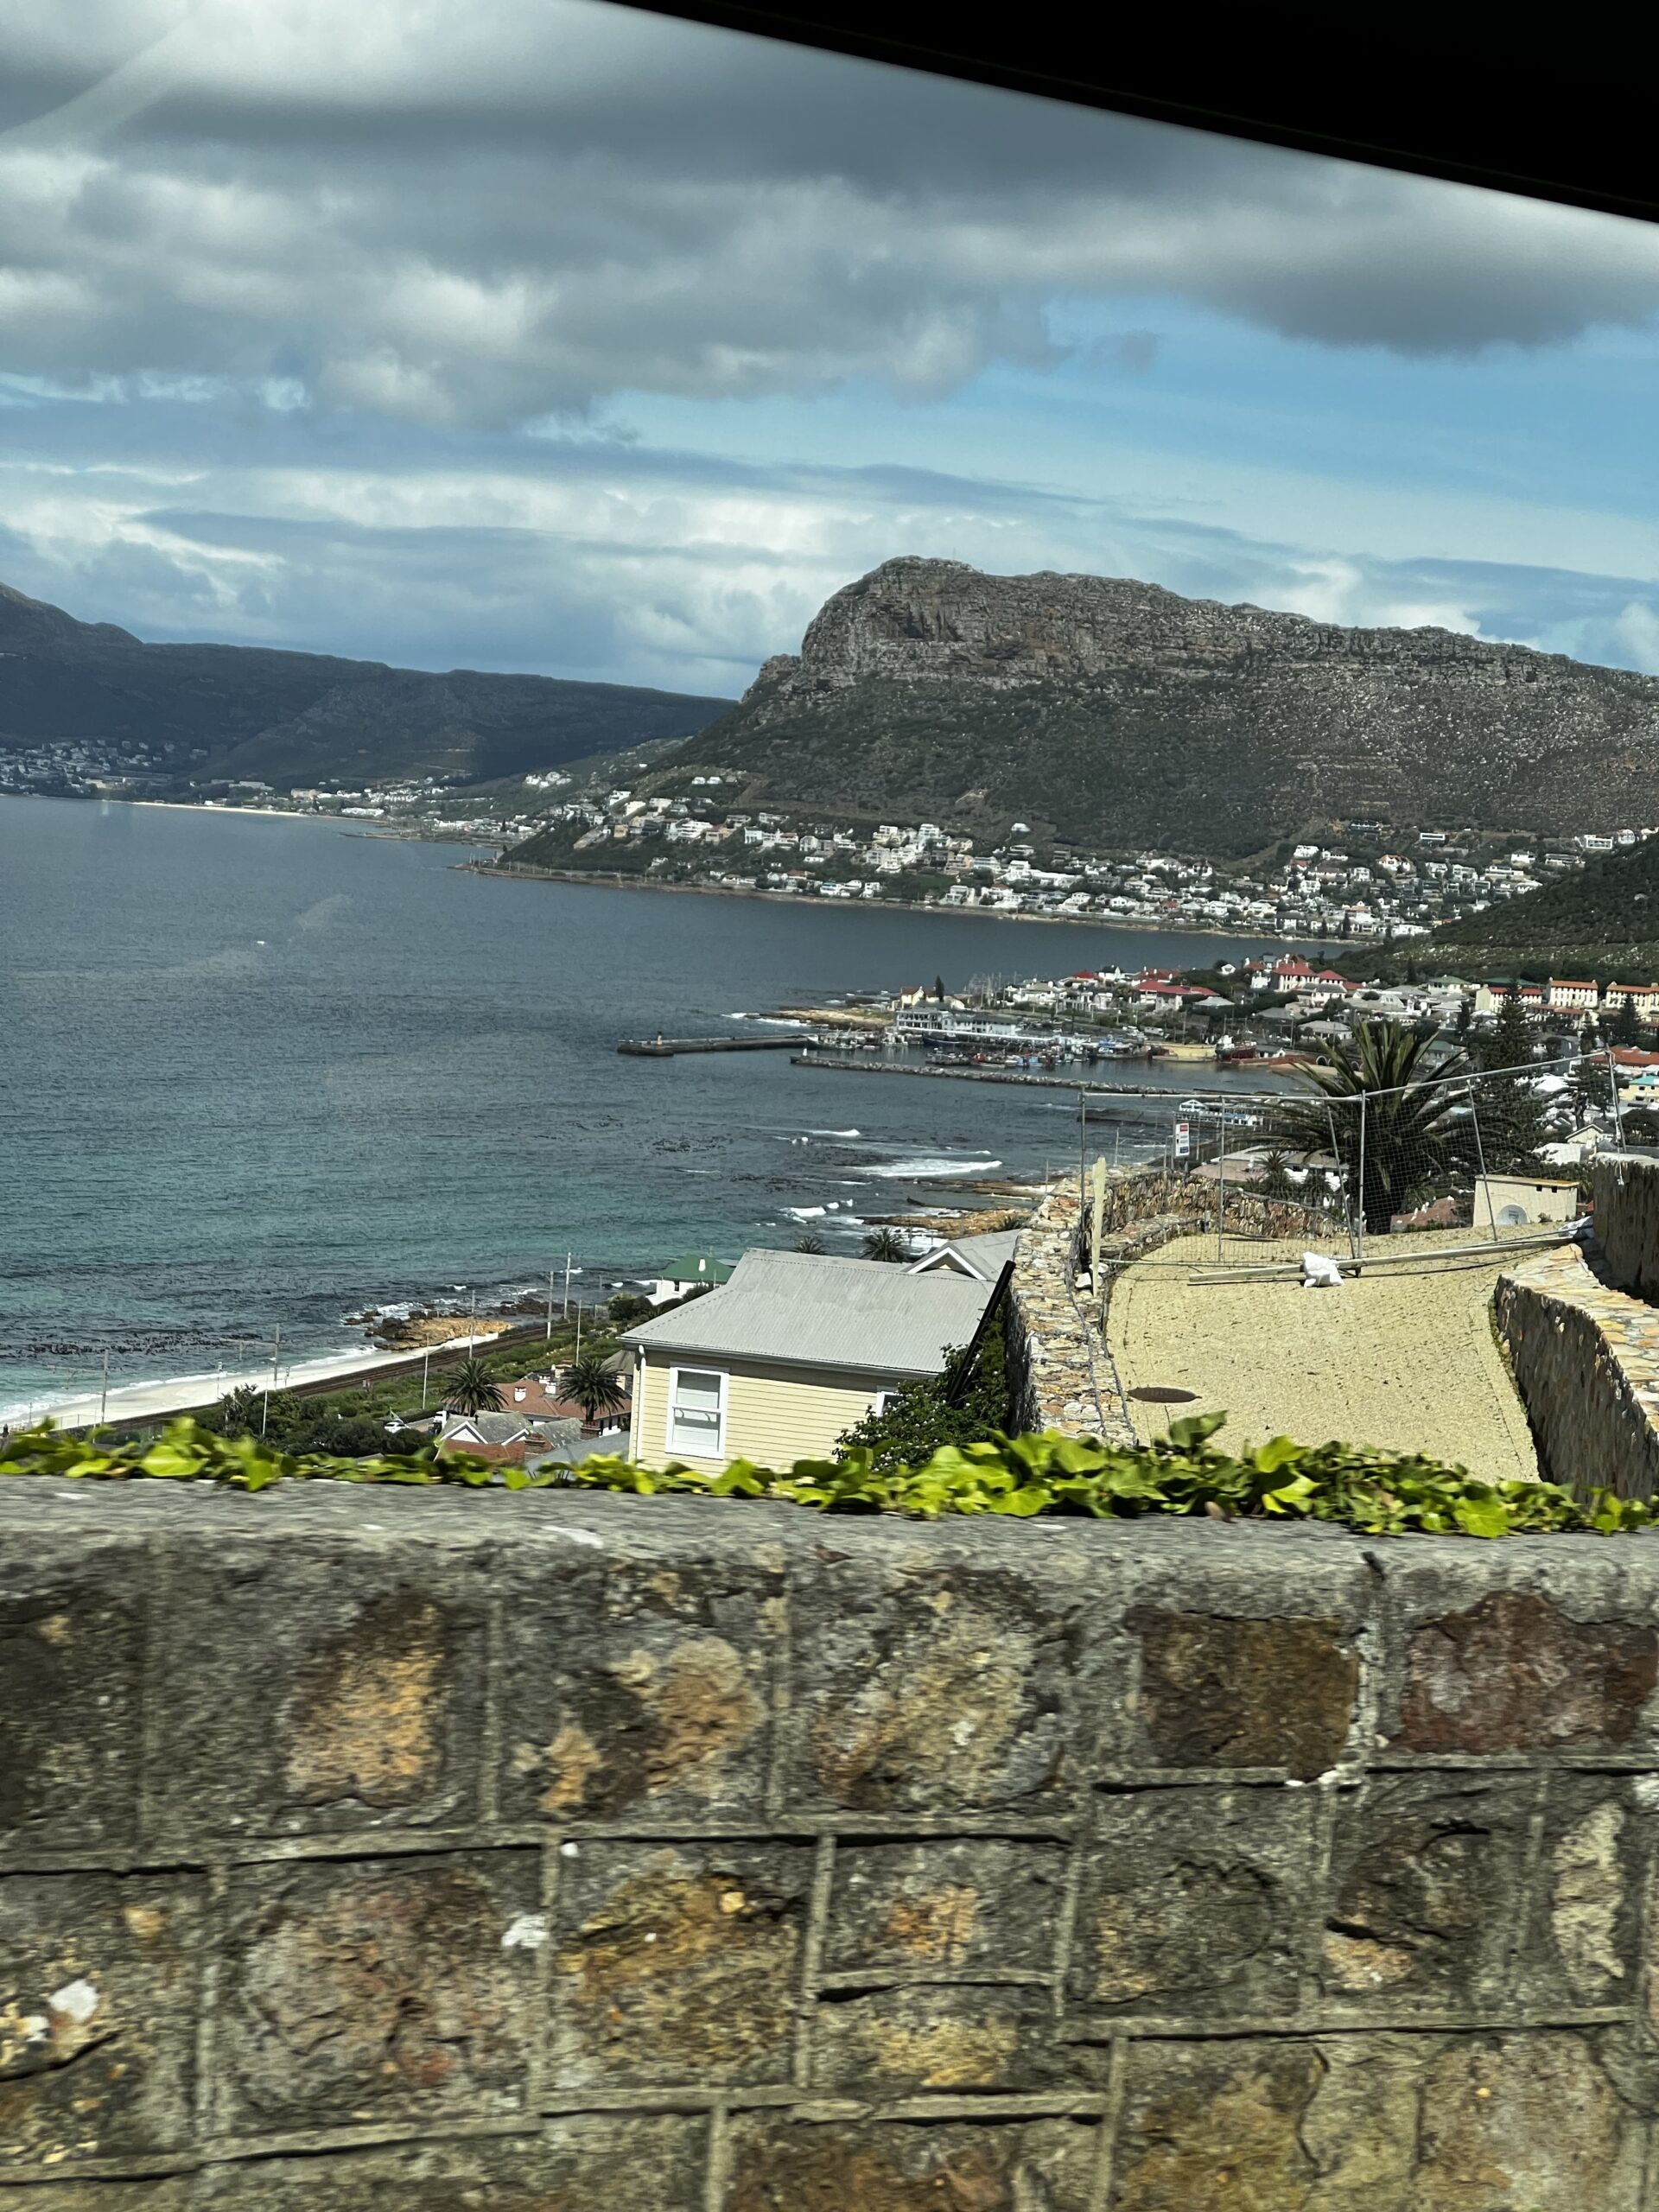 Leaving Cape Town for the Hermanus Coastal Area